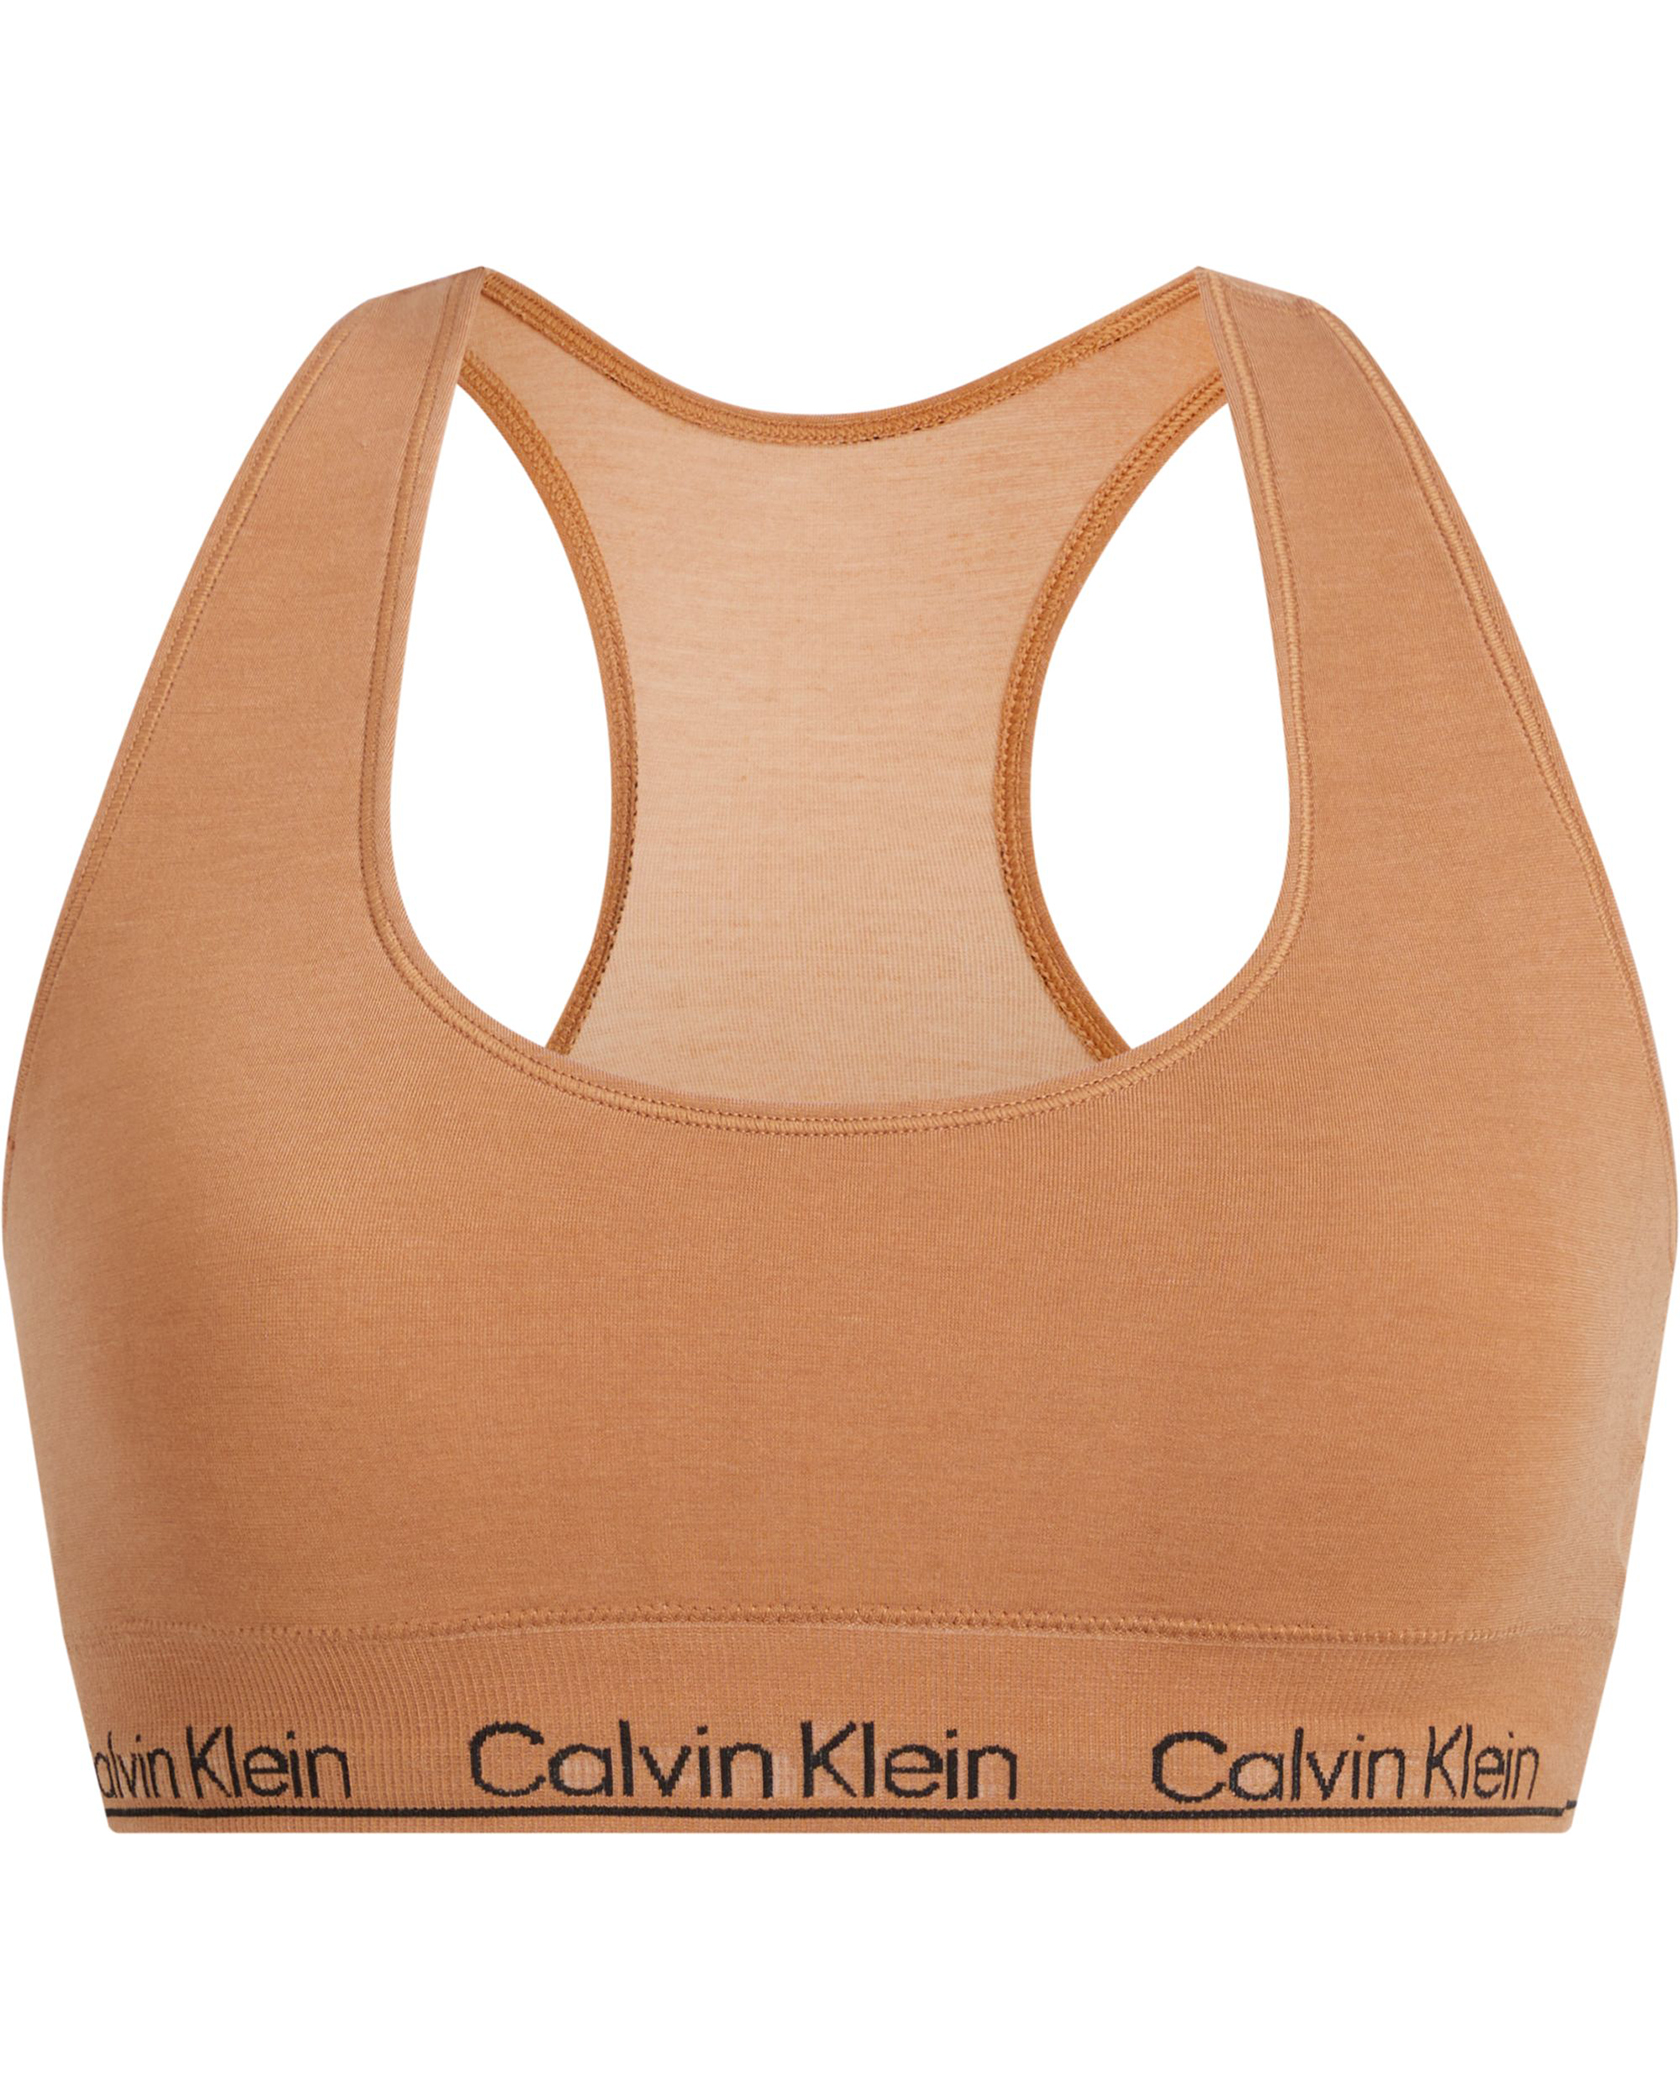 Calvin Klein Racerback Bralette - Modern Seamless W Sandalwood (Storlek L)